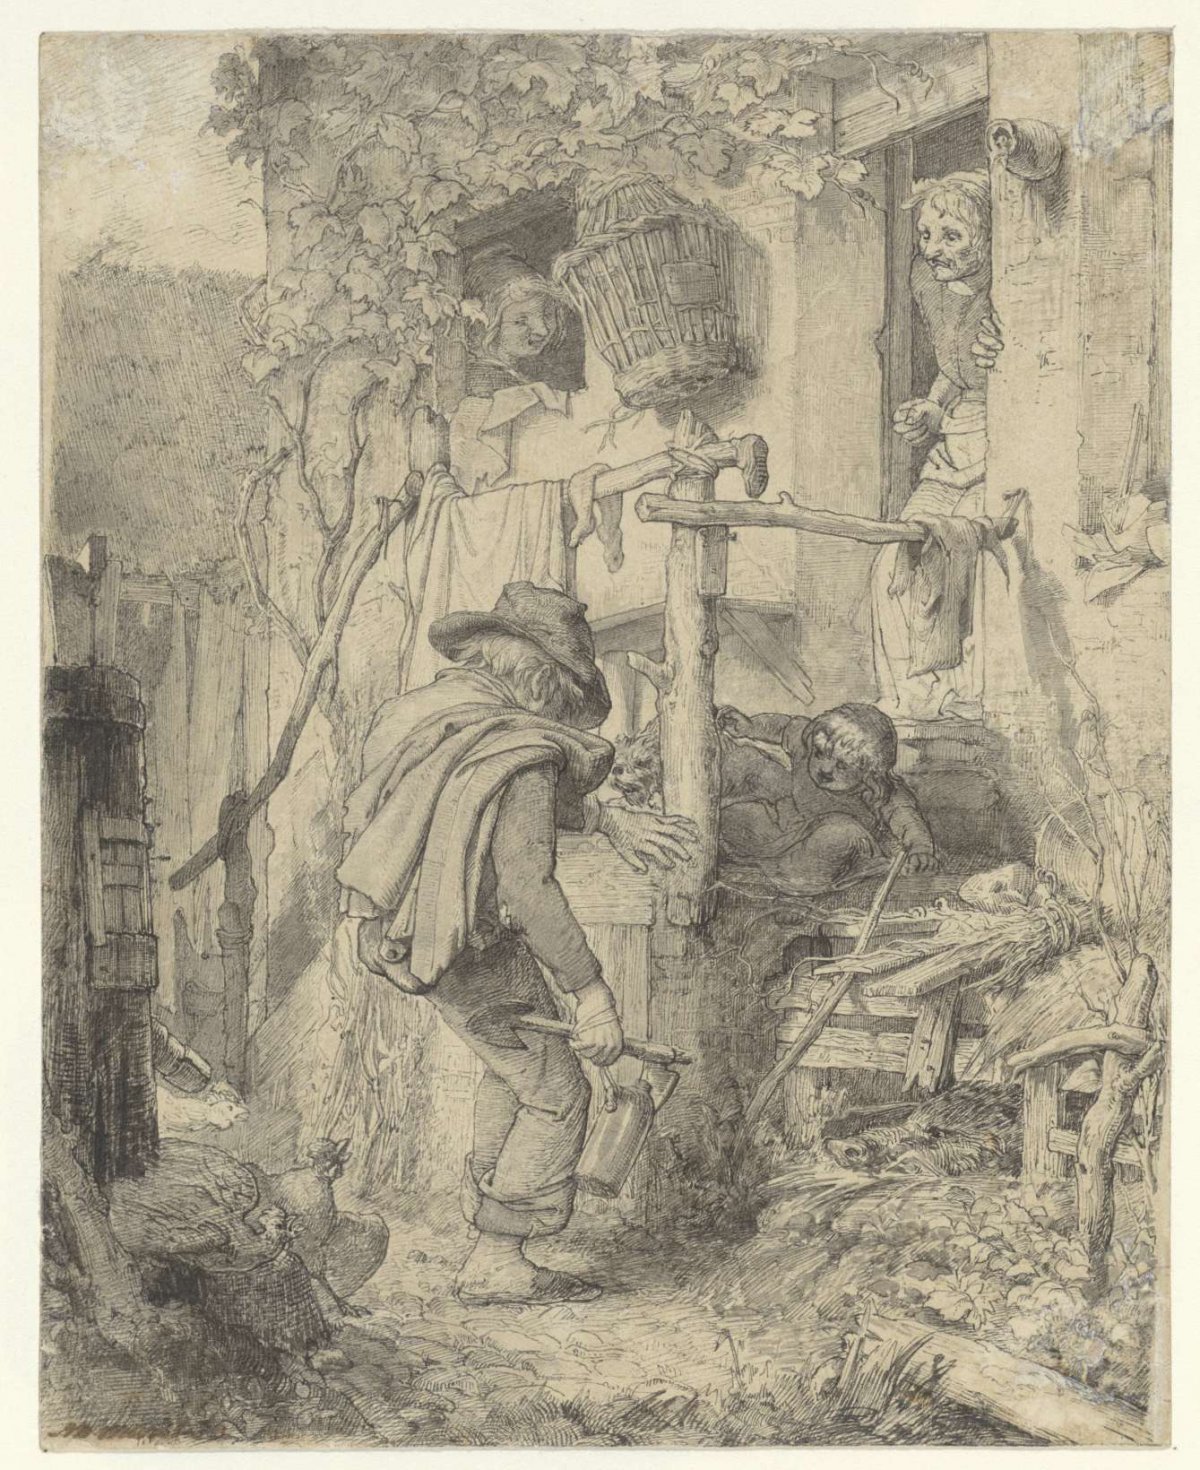 The Drunkard's Return, Matthijs Maris, c. 1856 - c. 1857